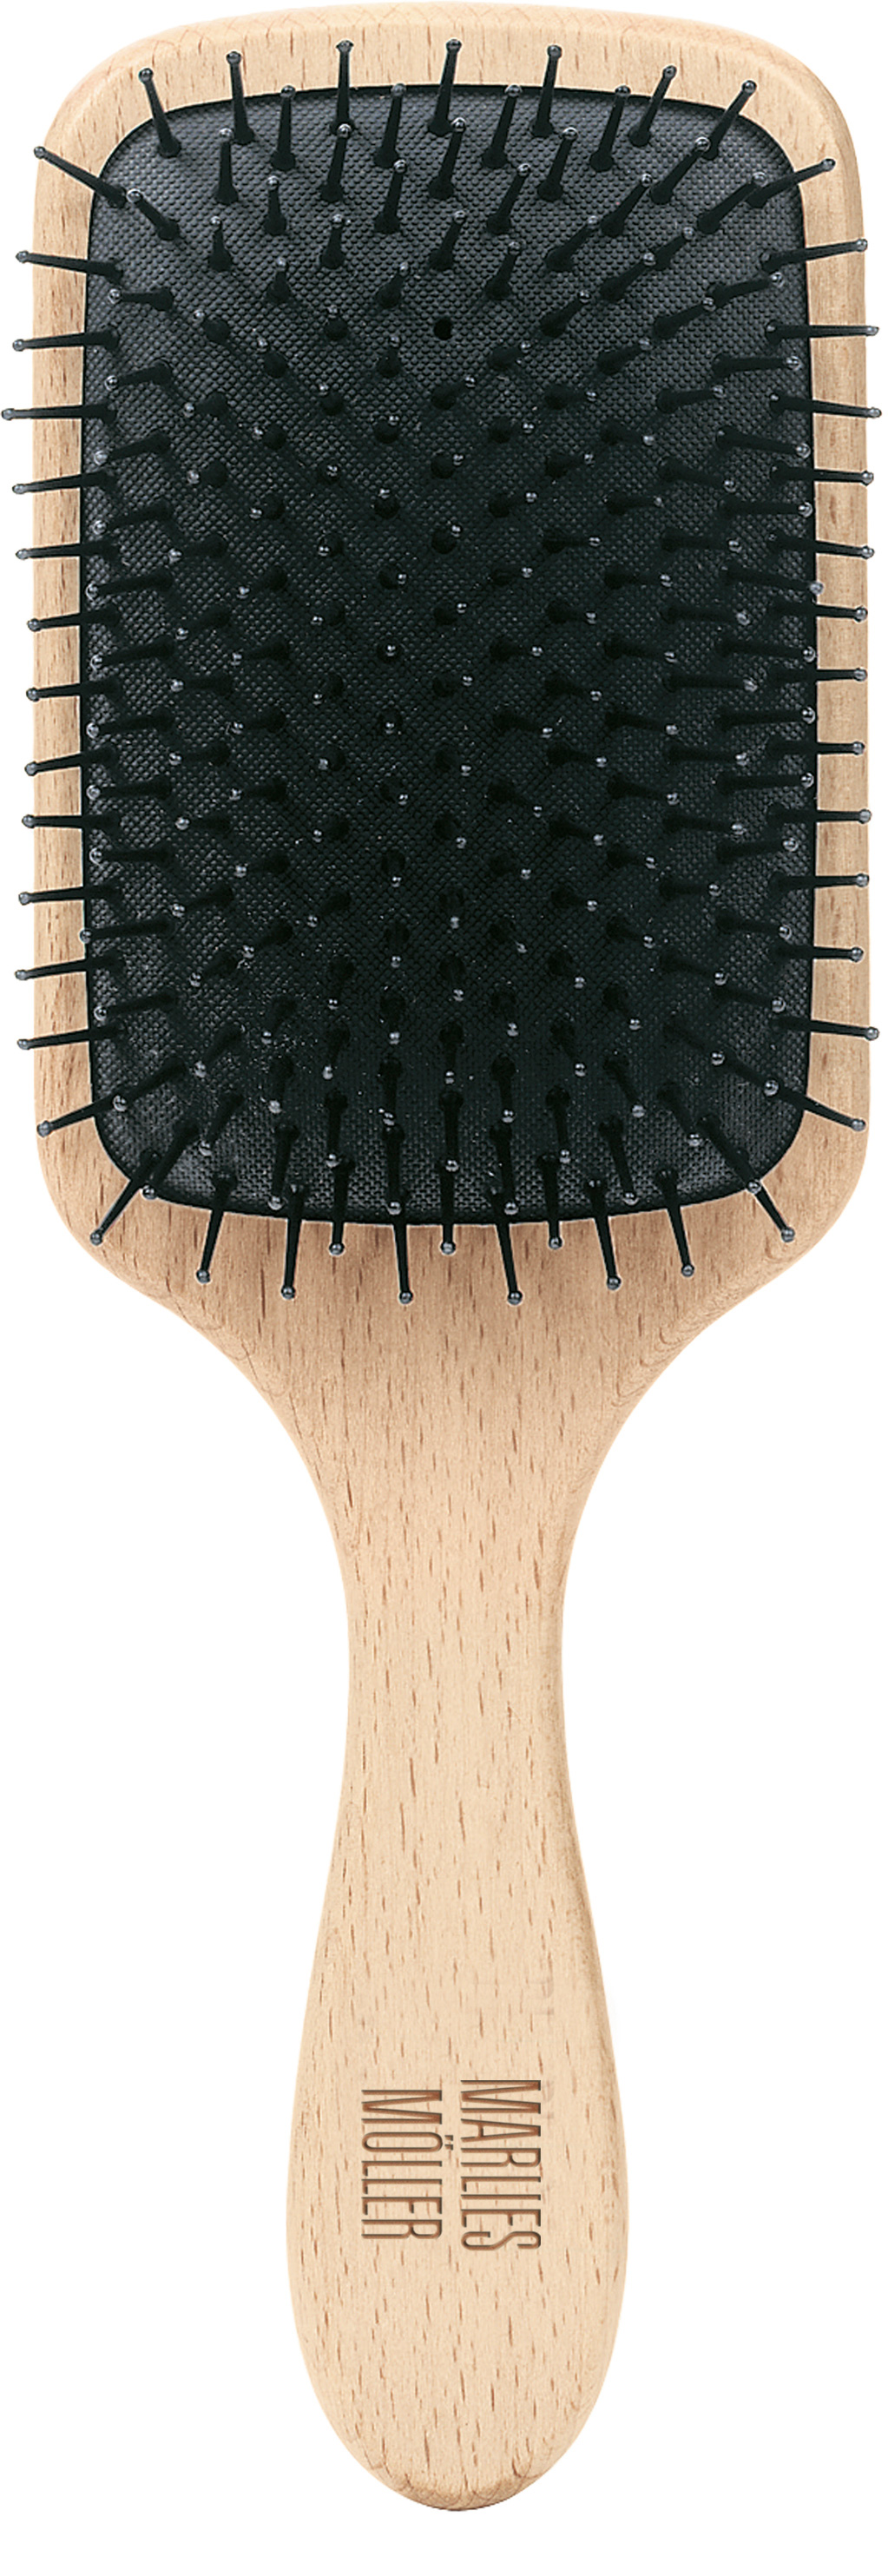 Marlies Möller Brush  Classic Haar und Kopfhaut Bürste